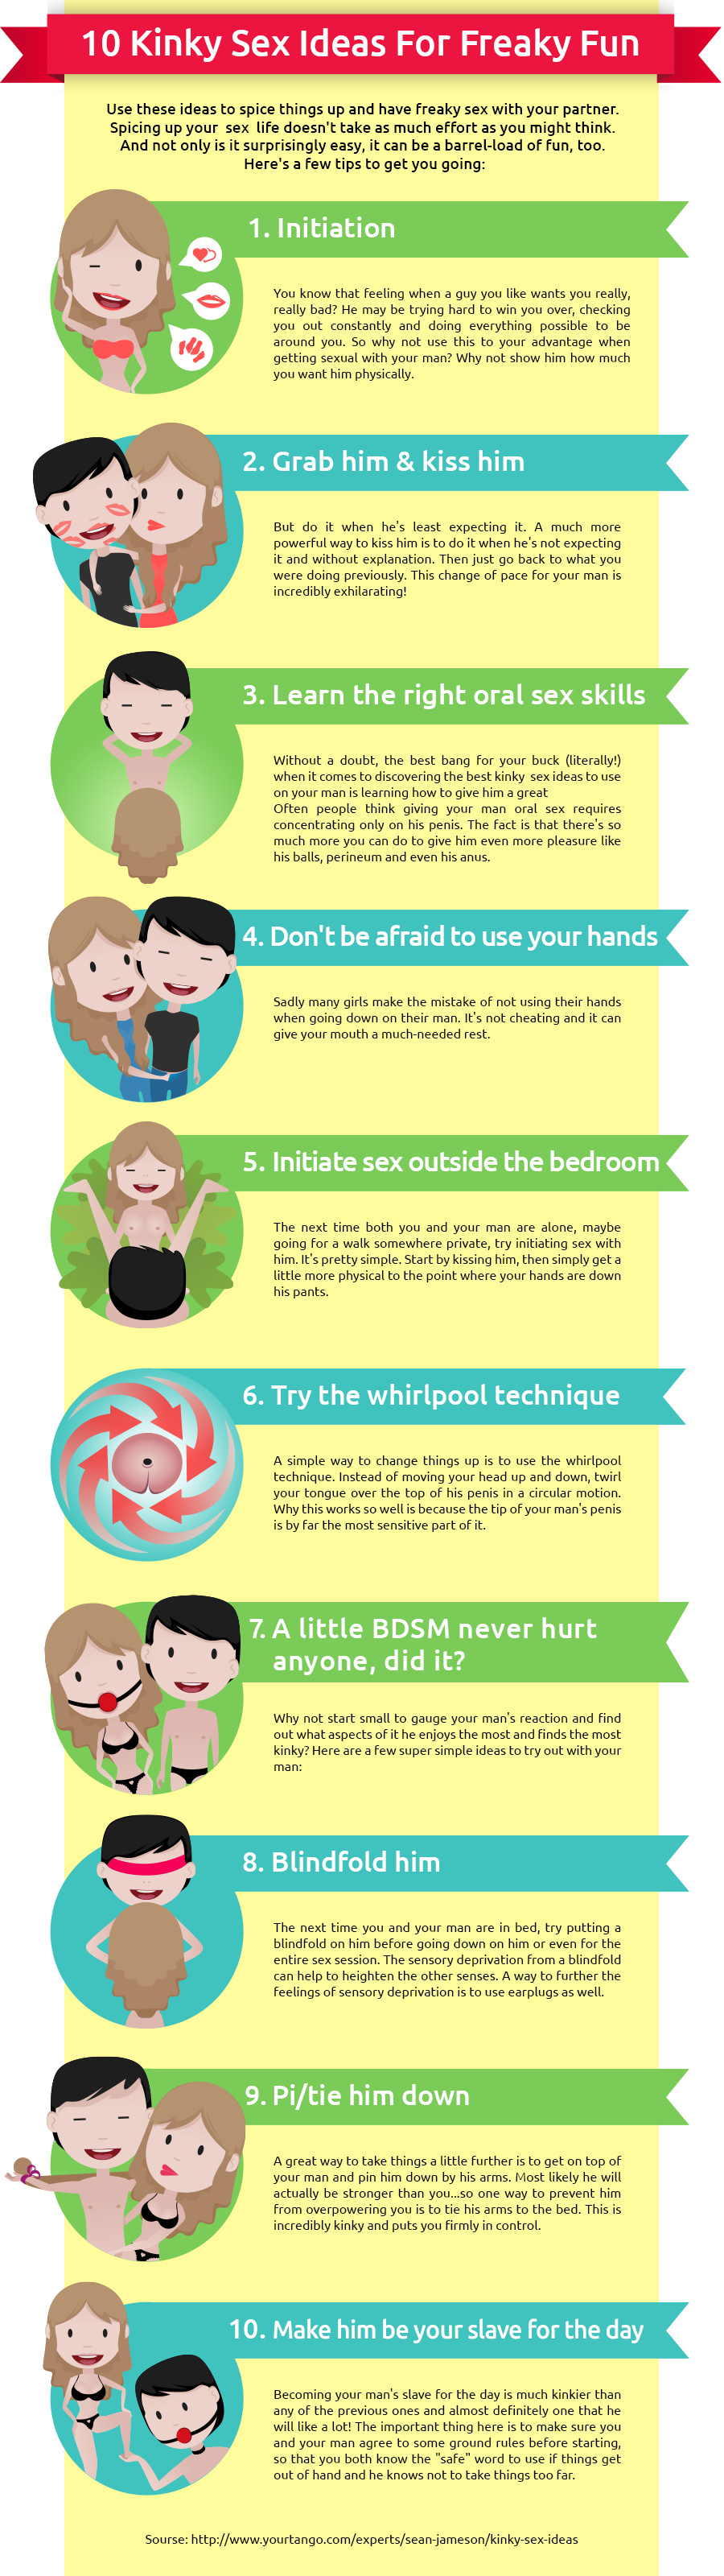 11 Kinky Sex Ideas For Freaky Fun Visually